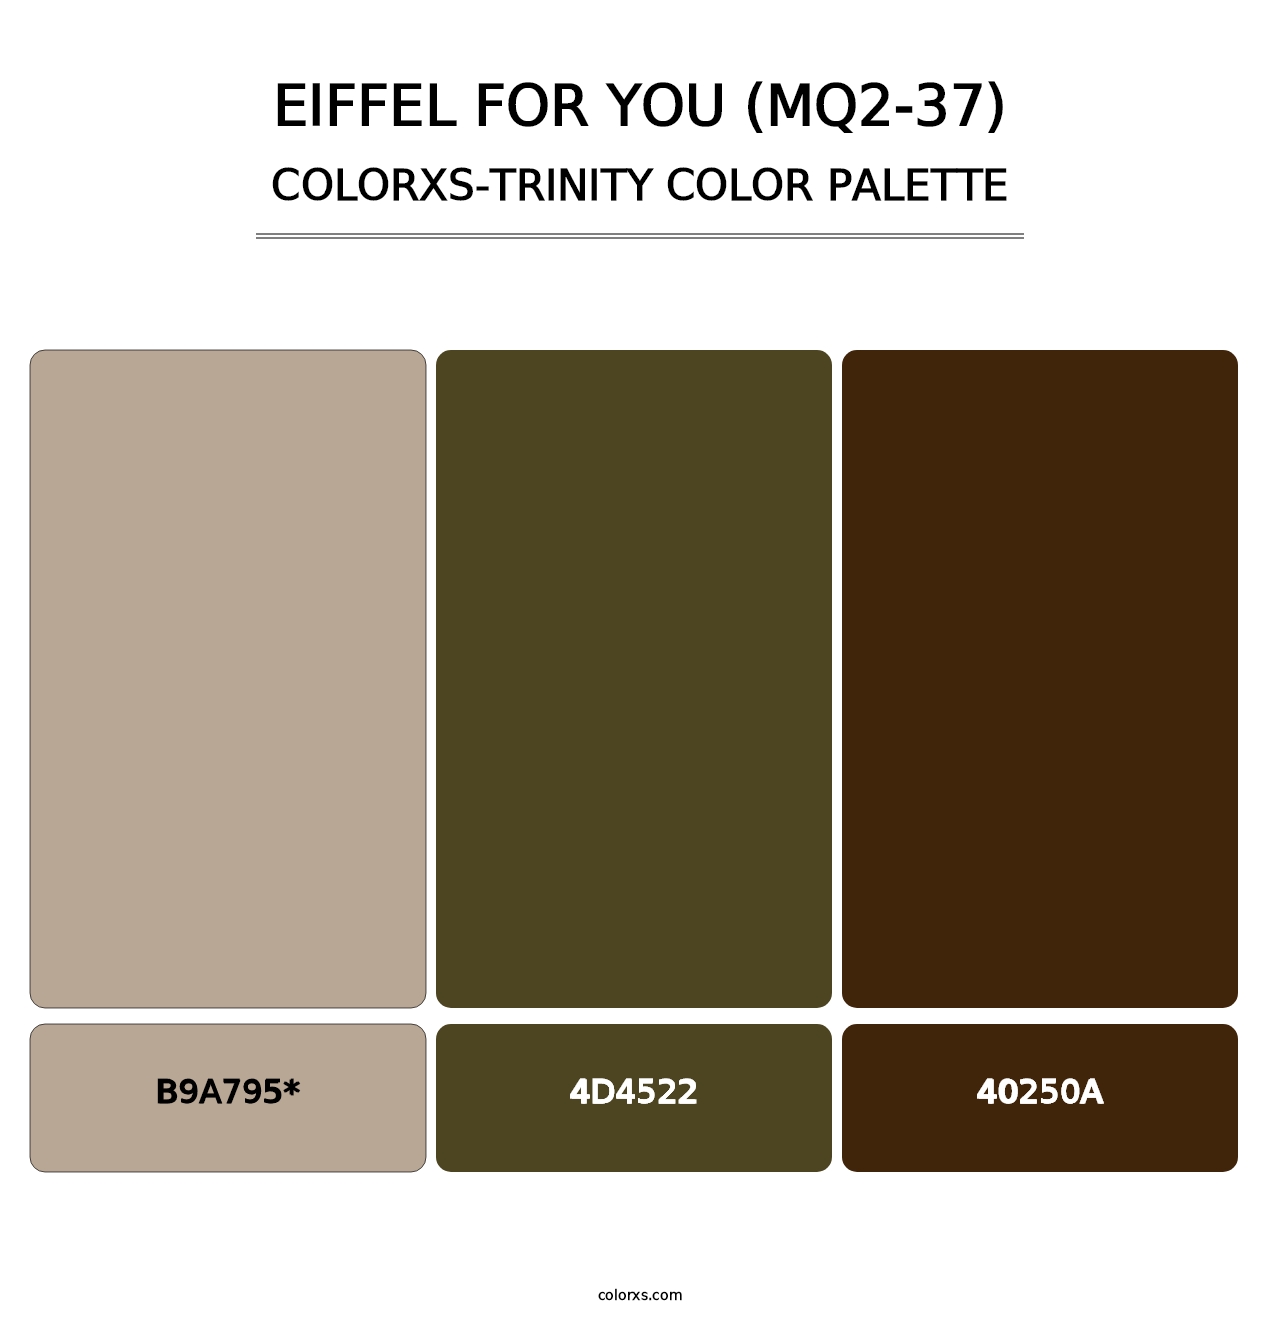 Eiffel For You (MQ2-37) - Colorxs Trinity Palette